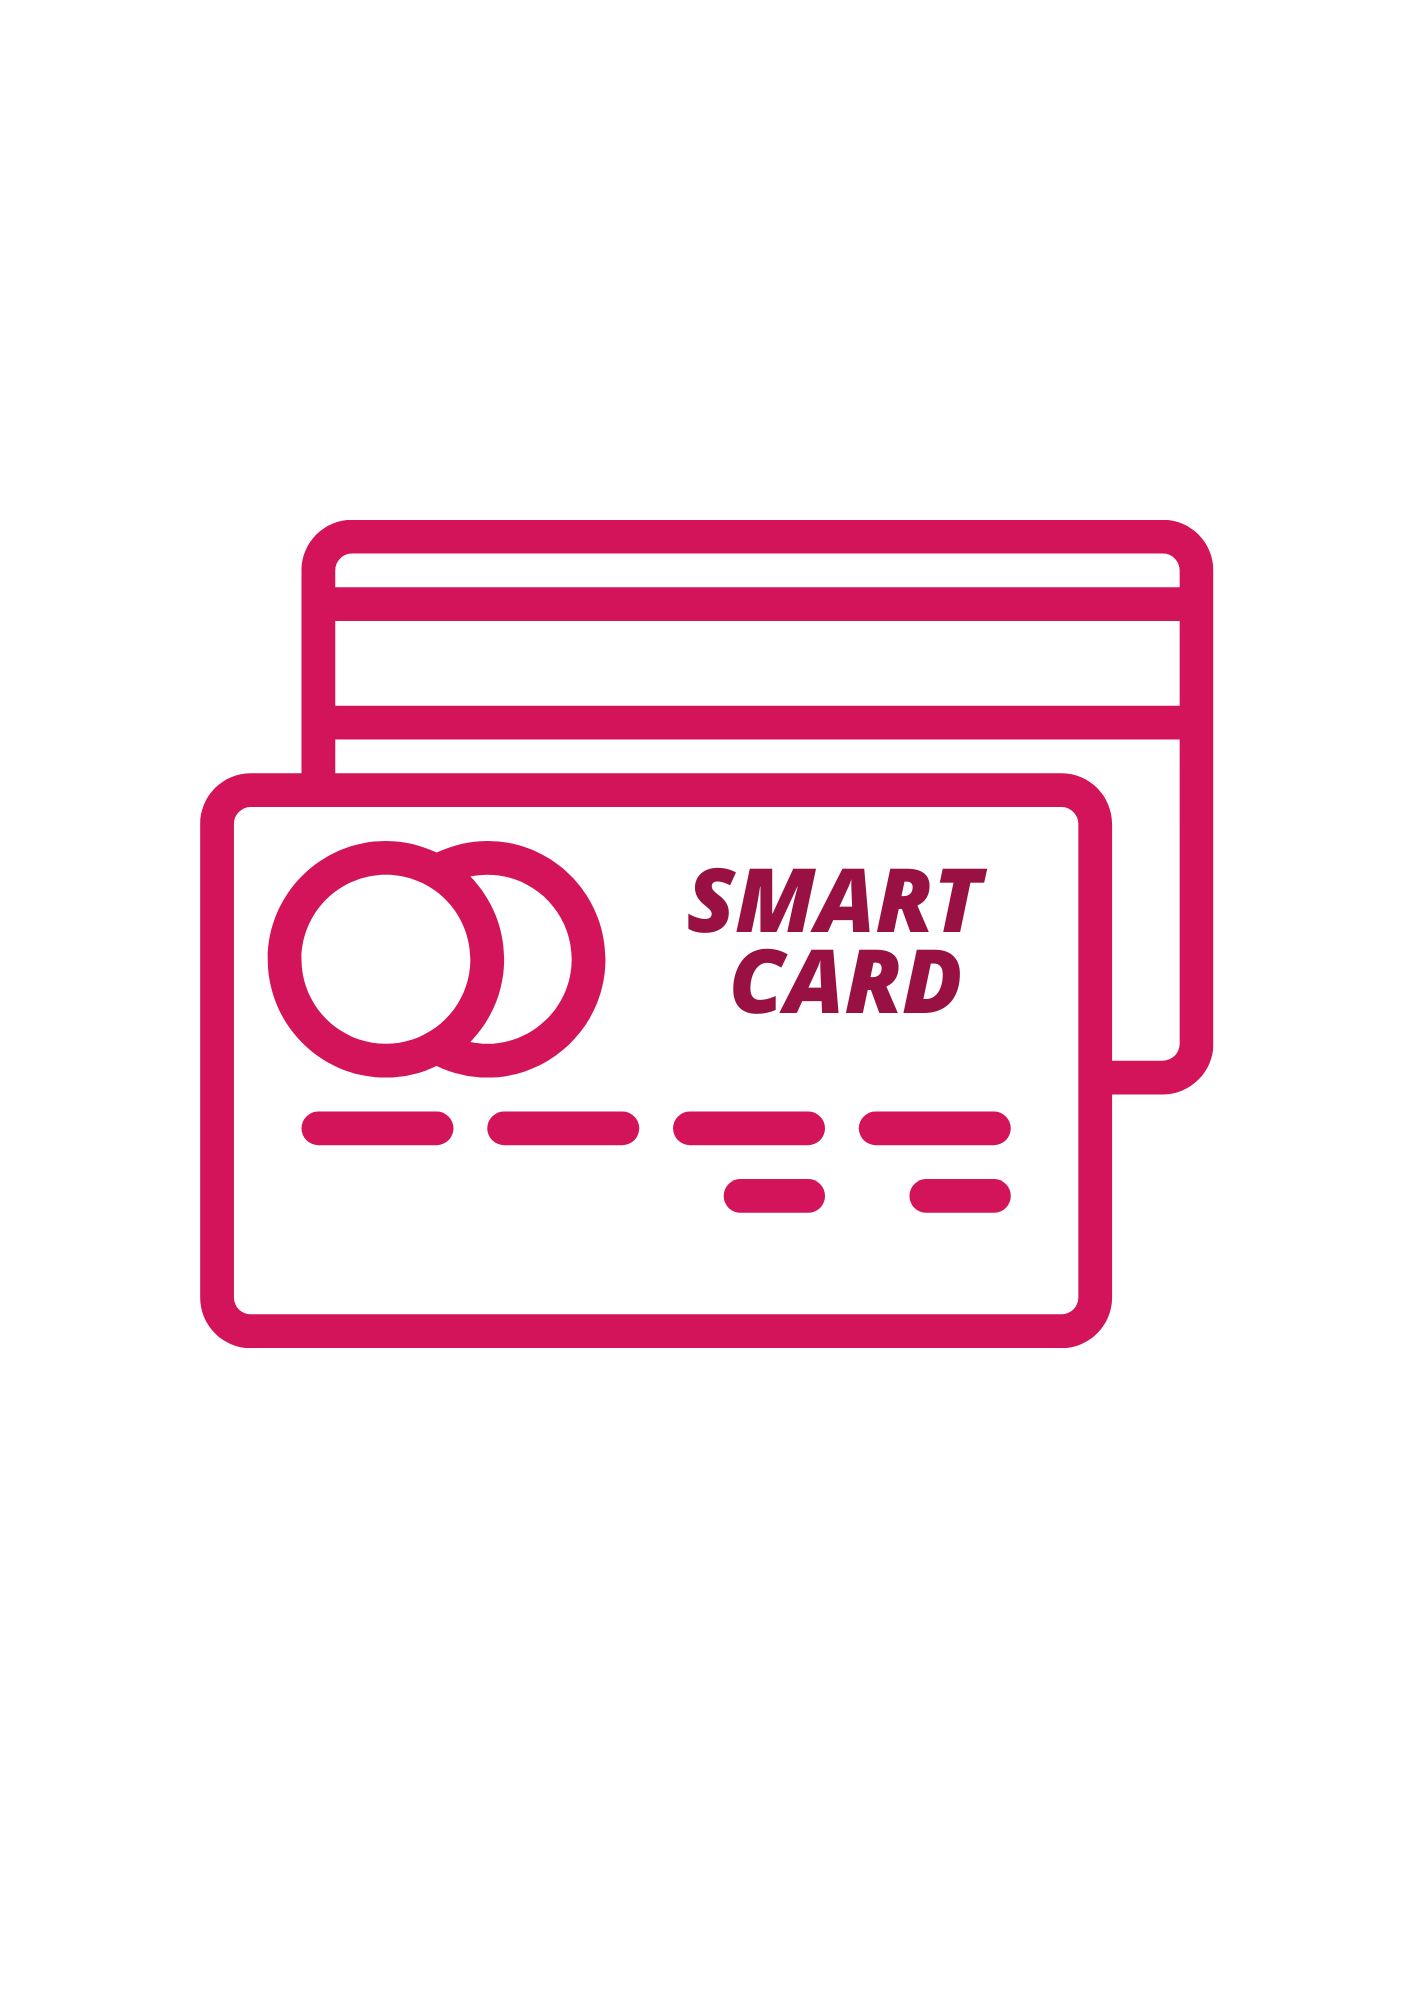 Richiesta Smart card